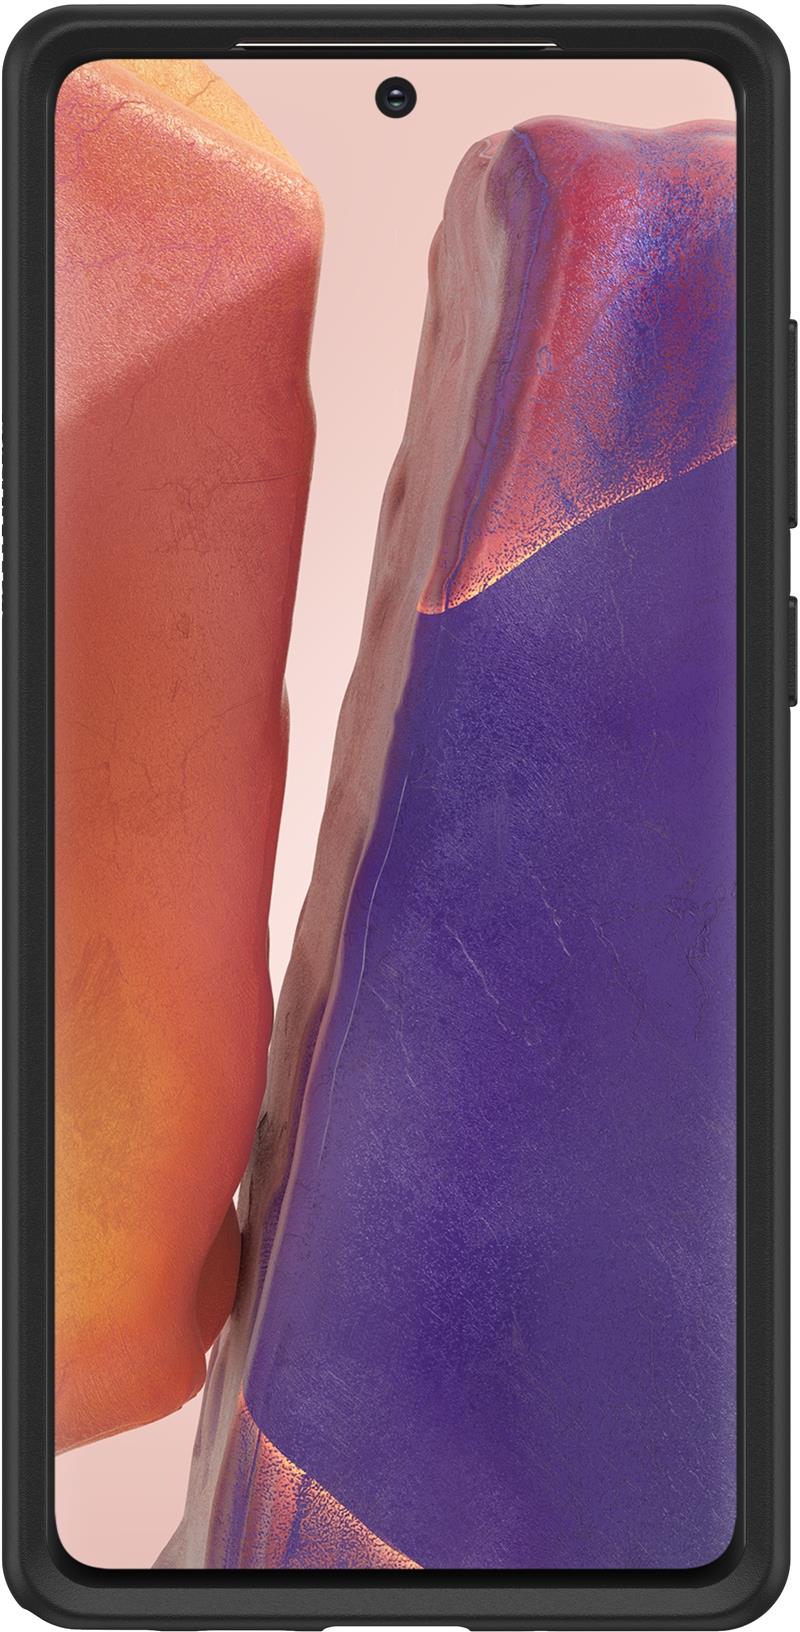 OtterBox Symmetry Case Samsung Galaxy Note20 Black